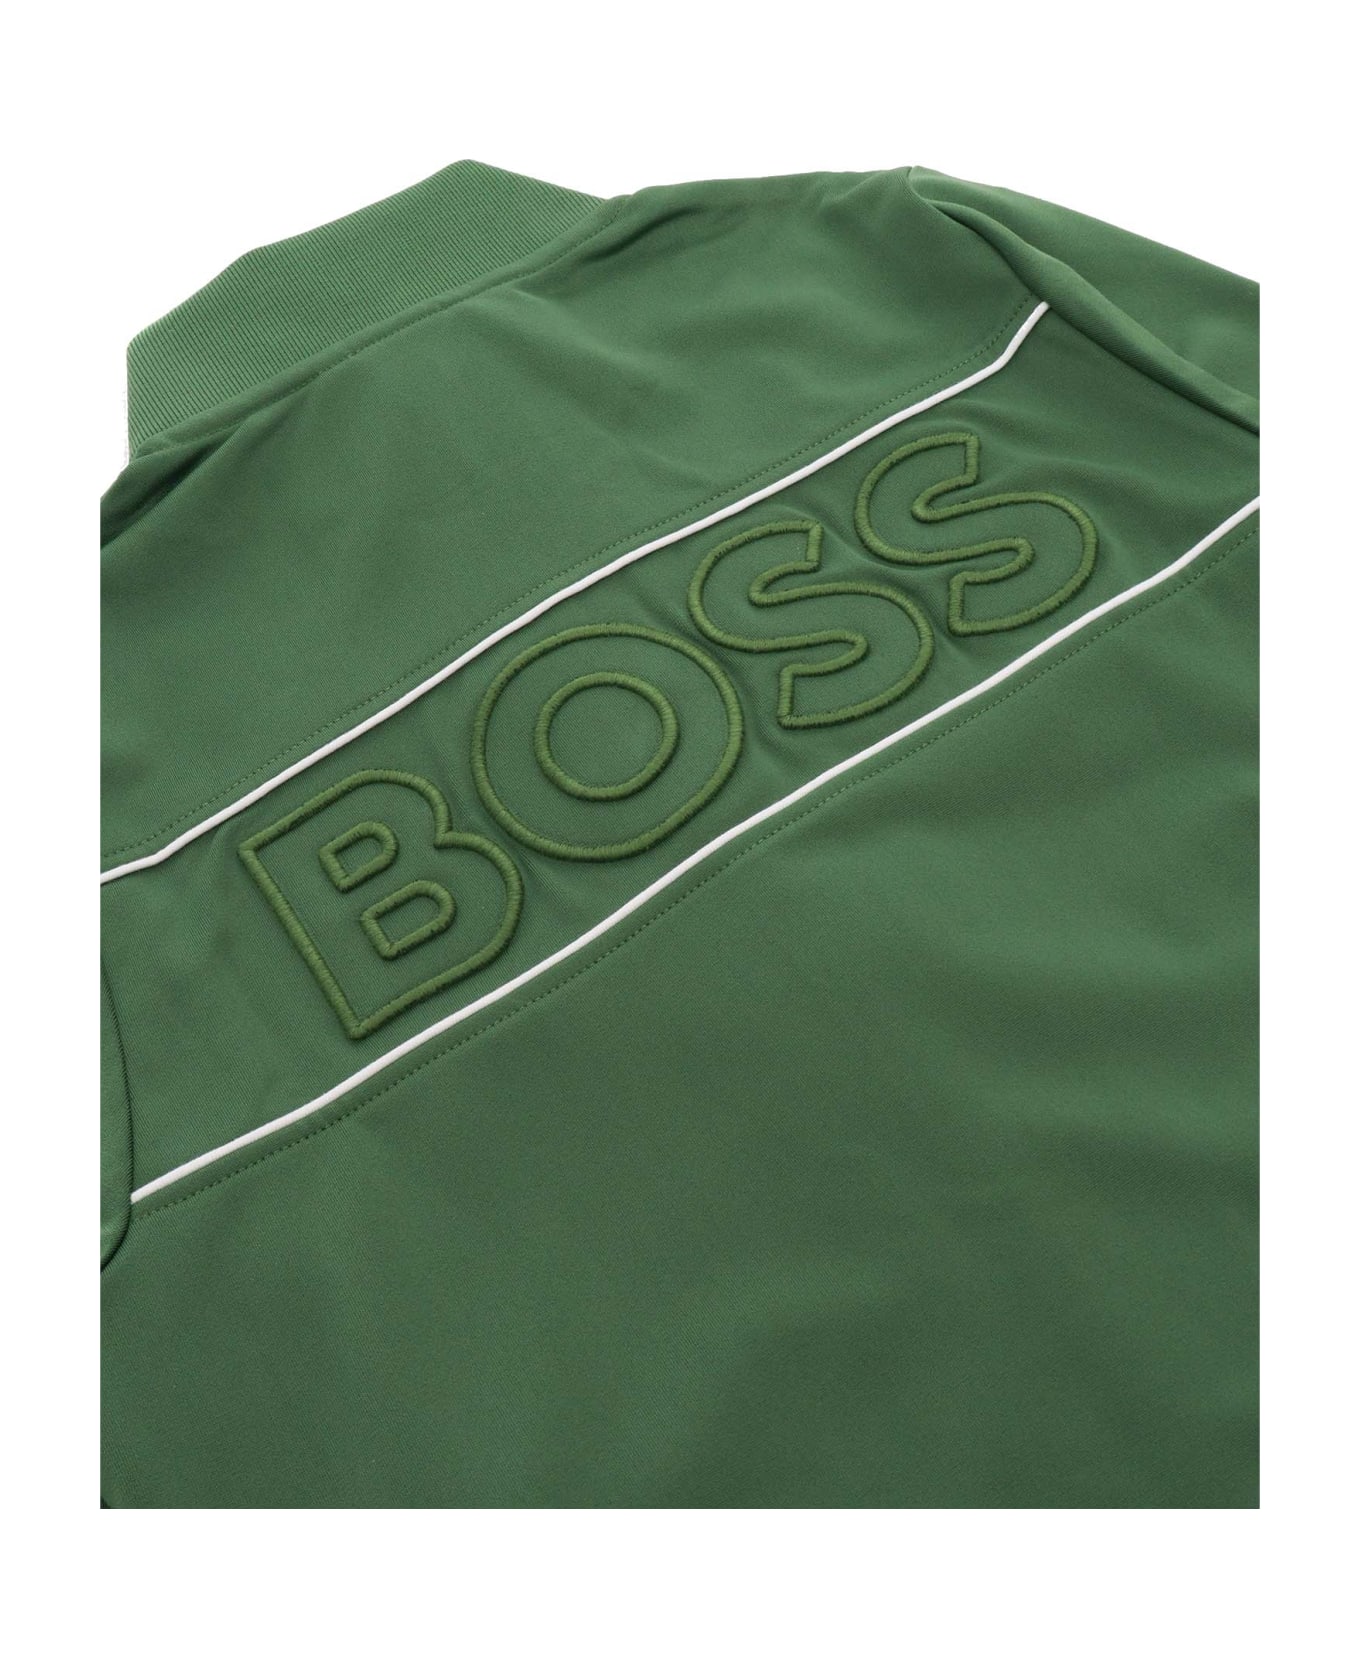 Hugo Boss Green Sweater With Zip Fastening - GREEN ニットウェア＆スウェットシャツ